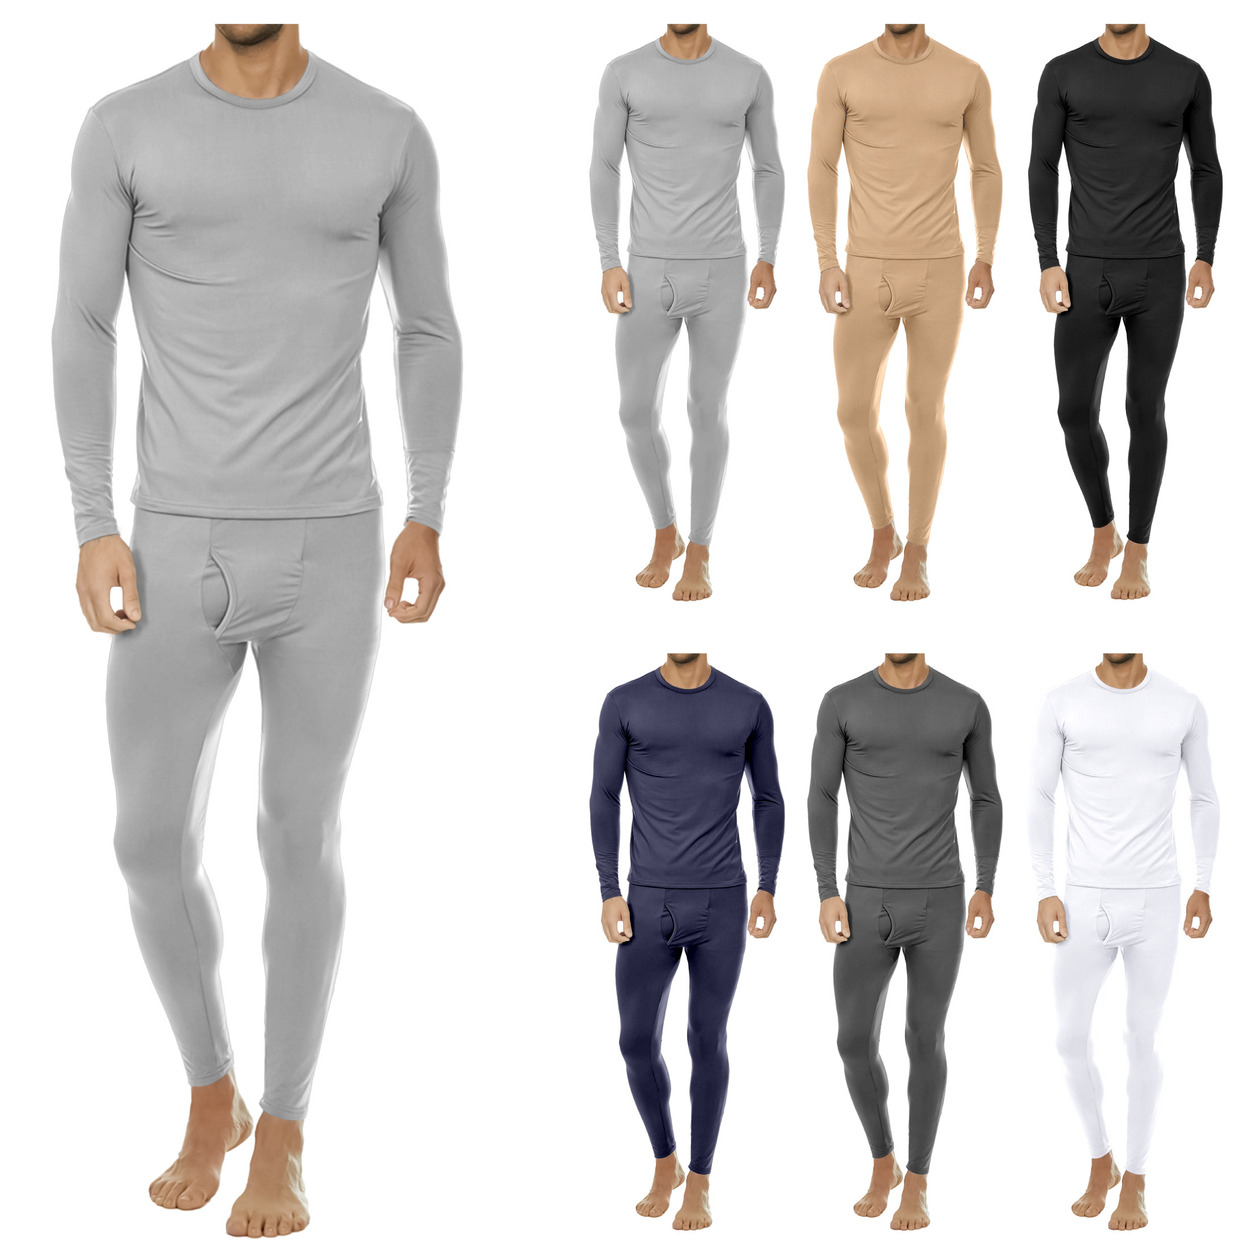 2-Sets: Men's Winter Warm Fleece Lined Thermal Underwear Set For Cold Weather - Black&black, Medium